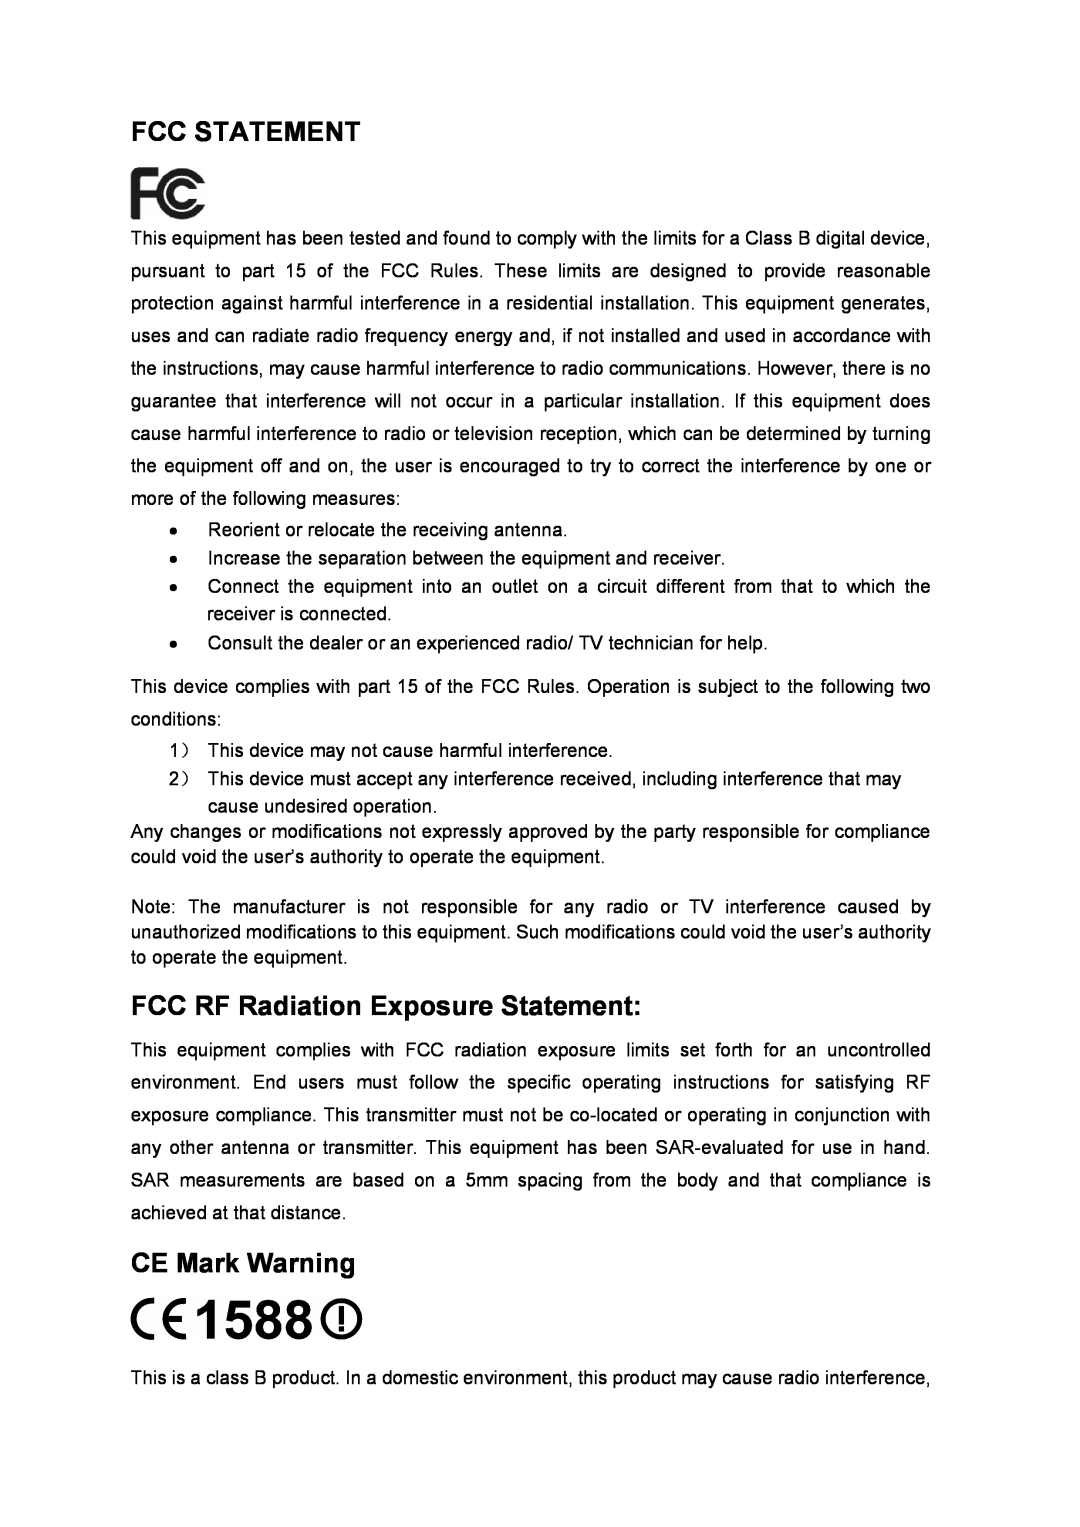 TP-Link TL-WDN4200 manual Fcc Statement, FCC RF Radiation Exposure Statement, CE Mark Warning 